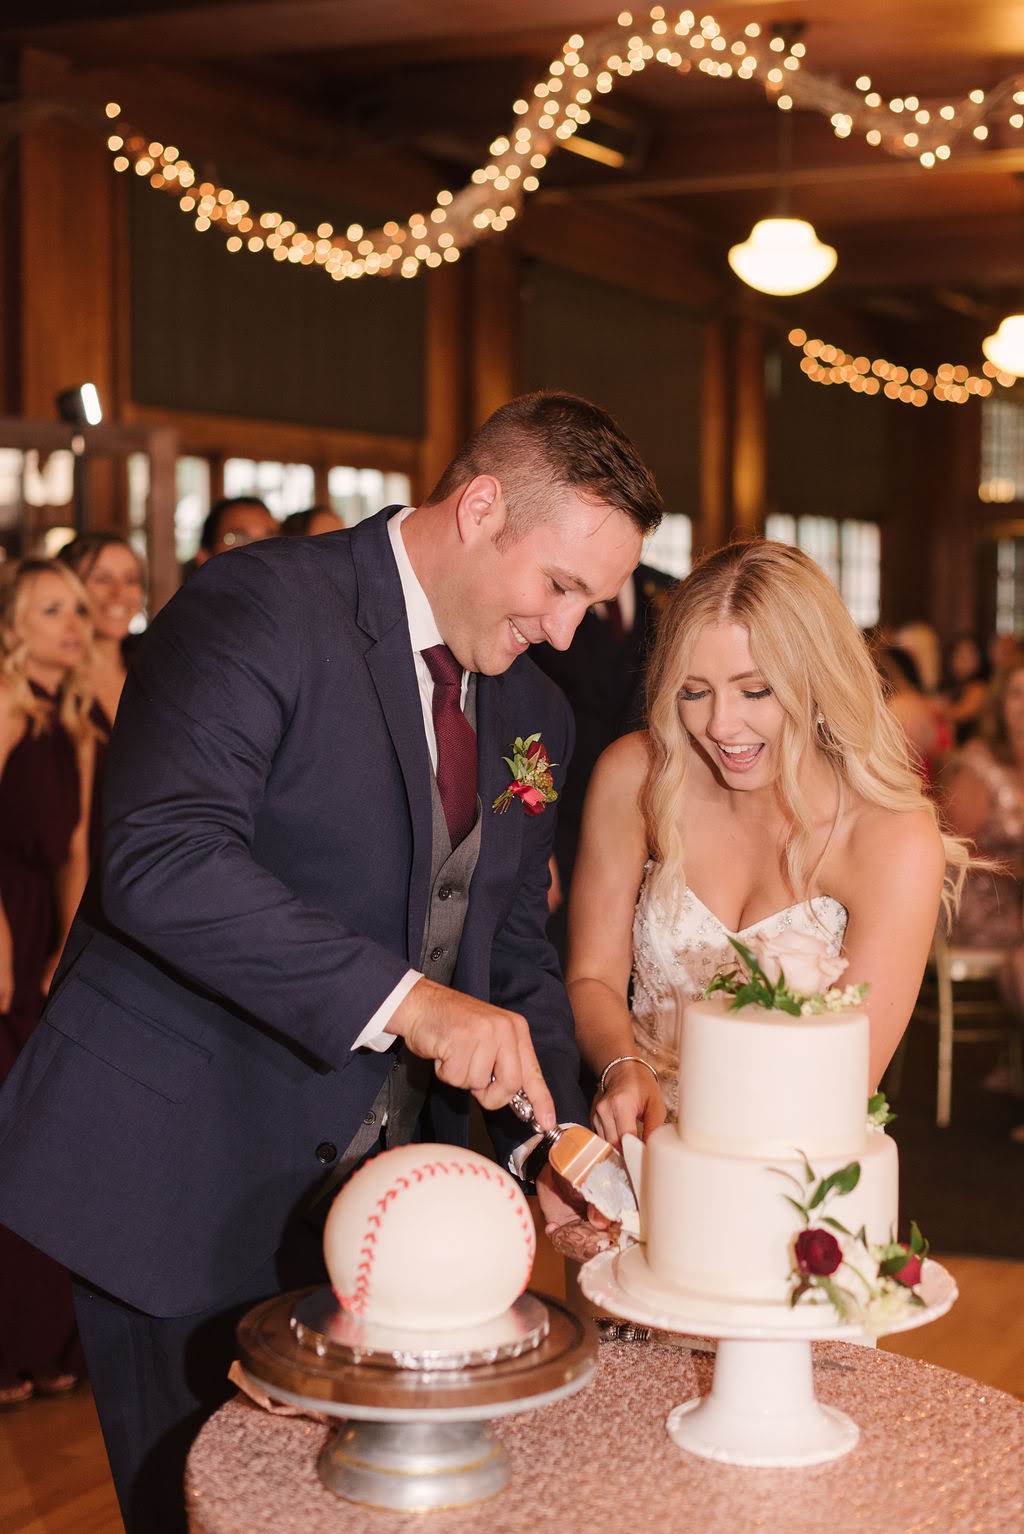 Kayley surprised Christian with a baseball groom’s cake!